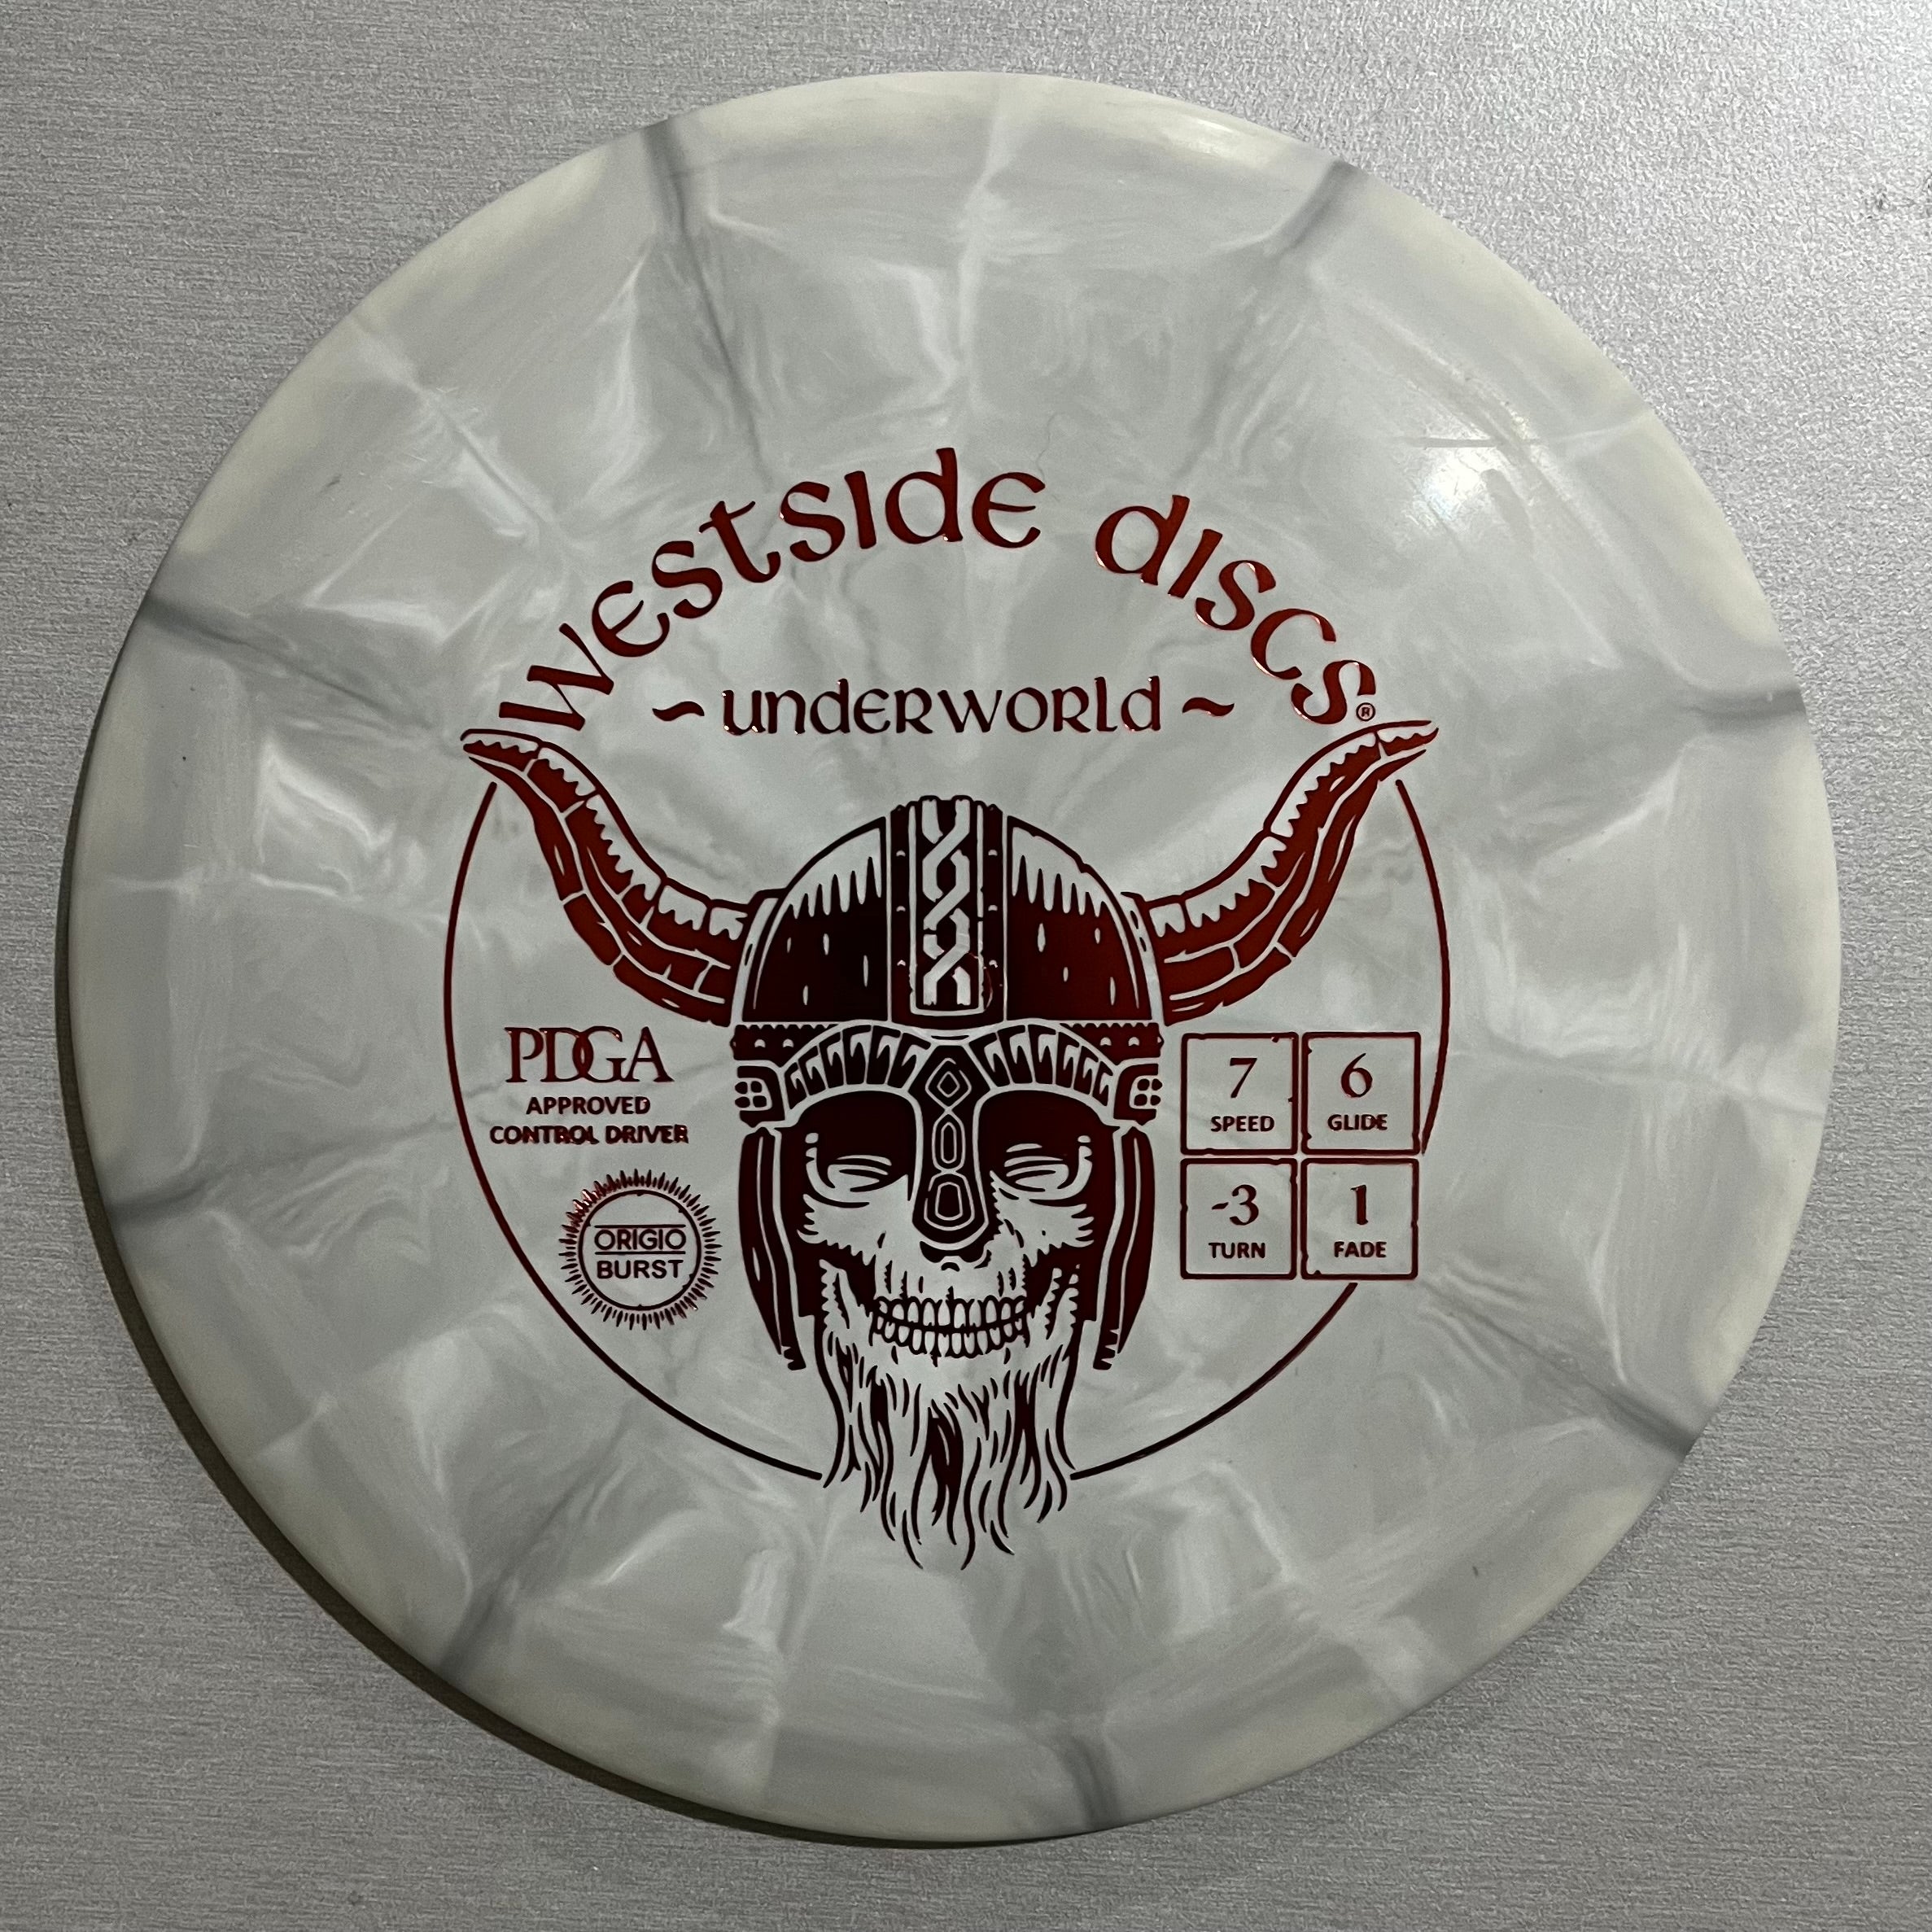 Westside Discs Underworld Origio Burst - Mid Range Disc - Sportinglife Turangi 